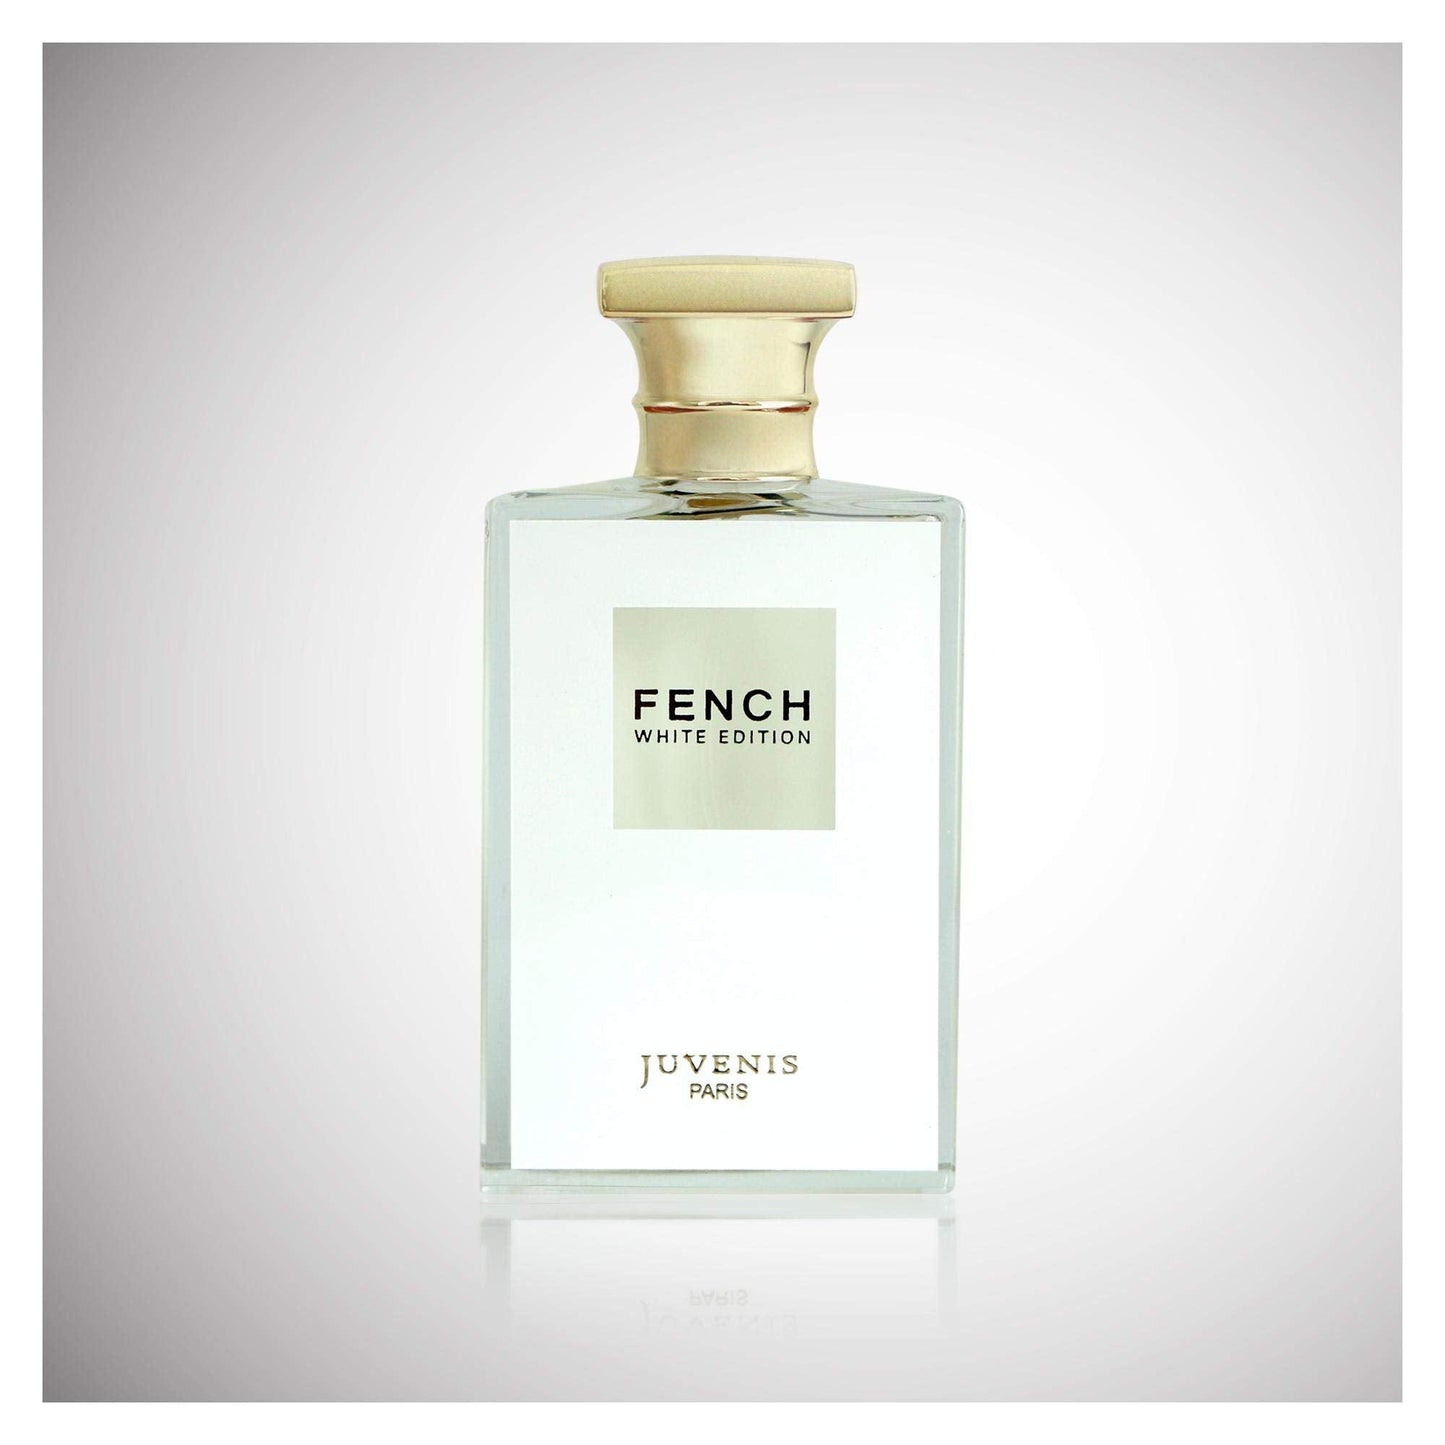 Fench White Edition Perfume